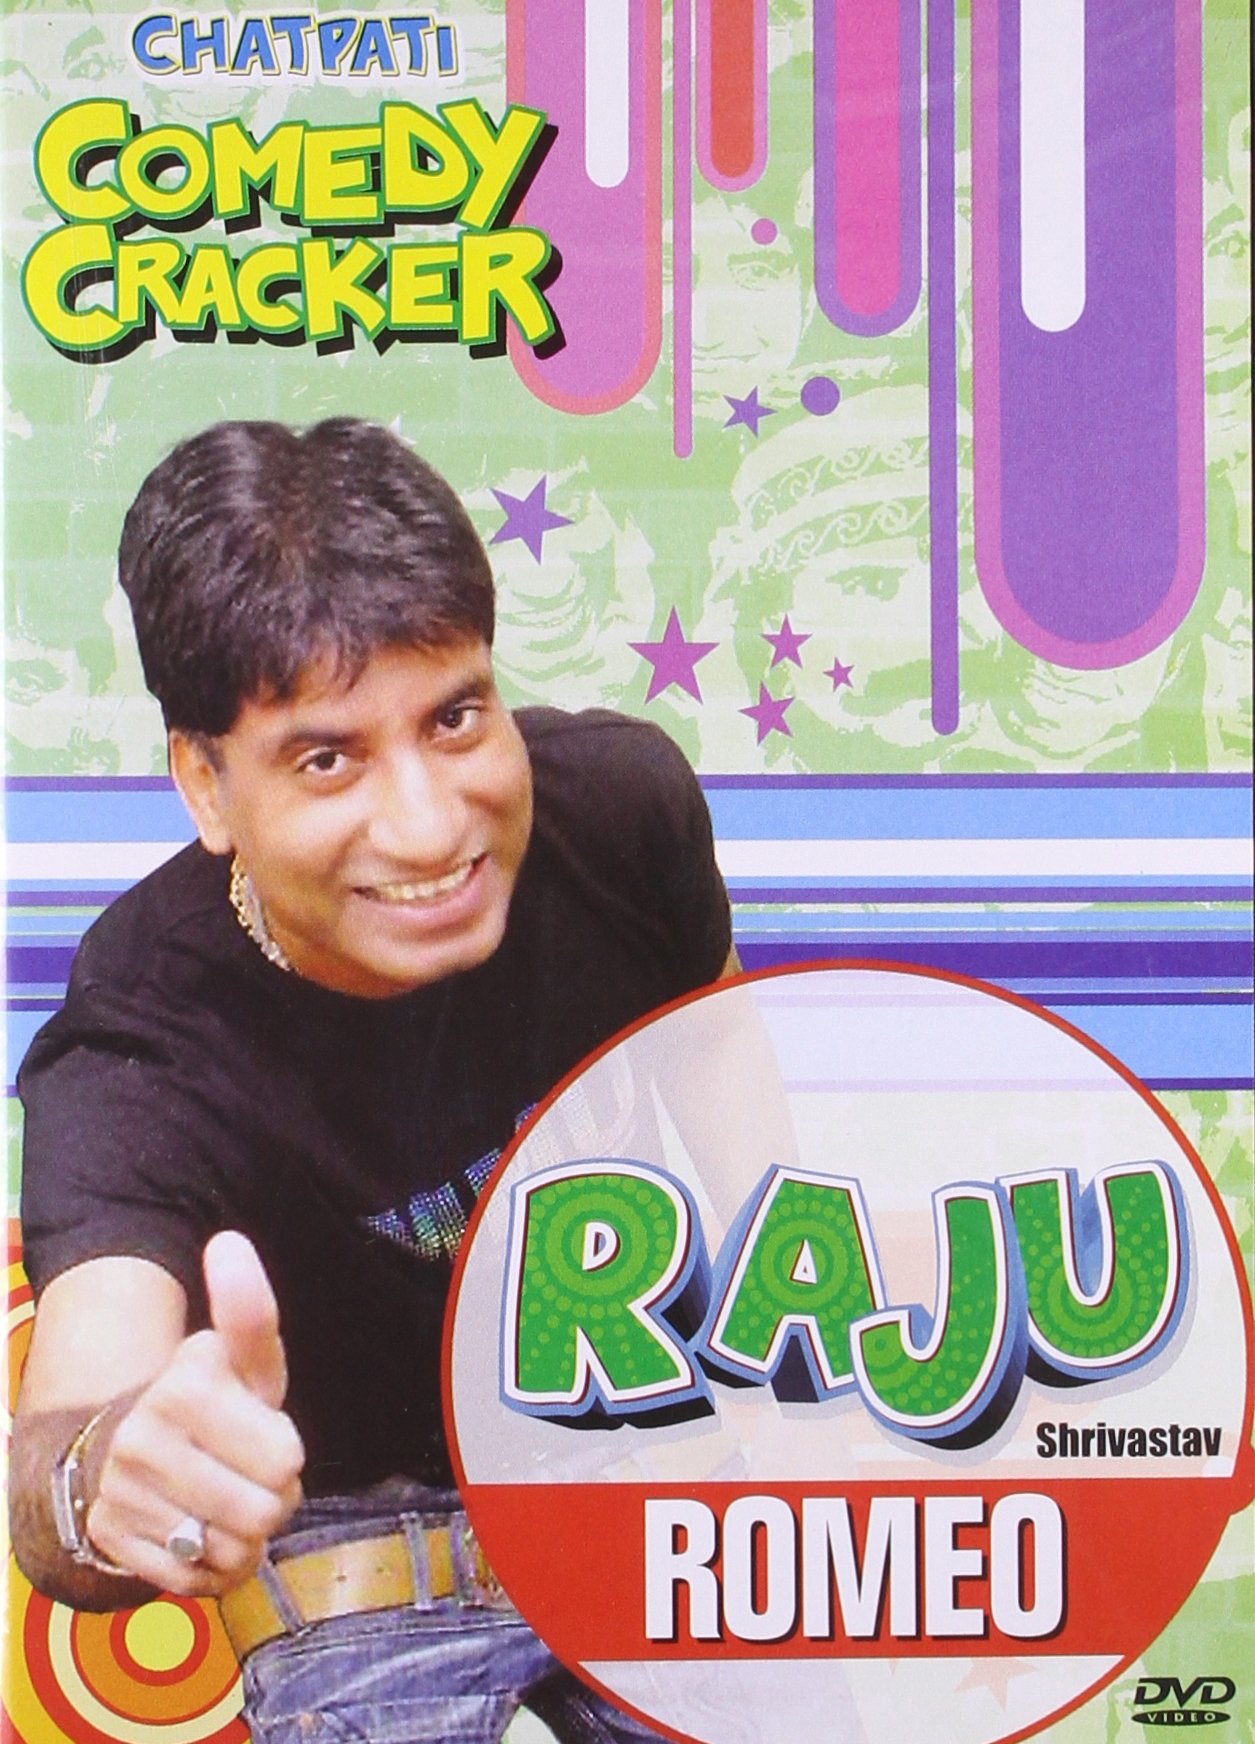 chatpati-comedy-cracker-raju-romeo-movie-purchase-or-watch-online